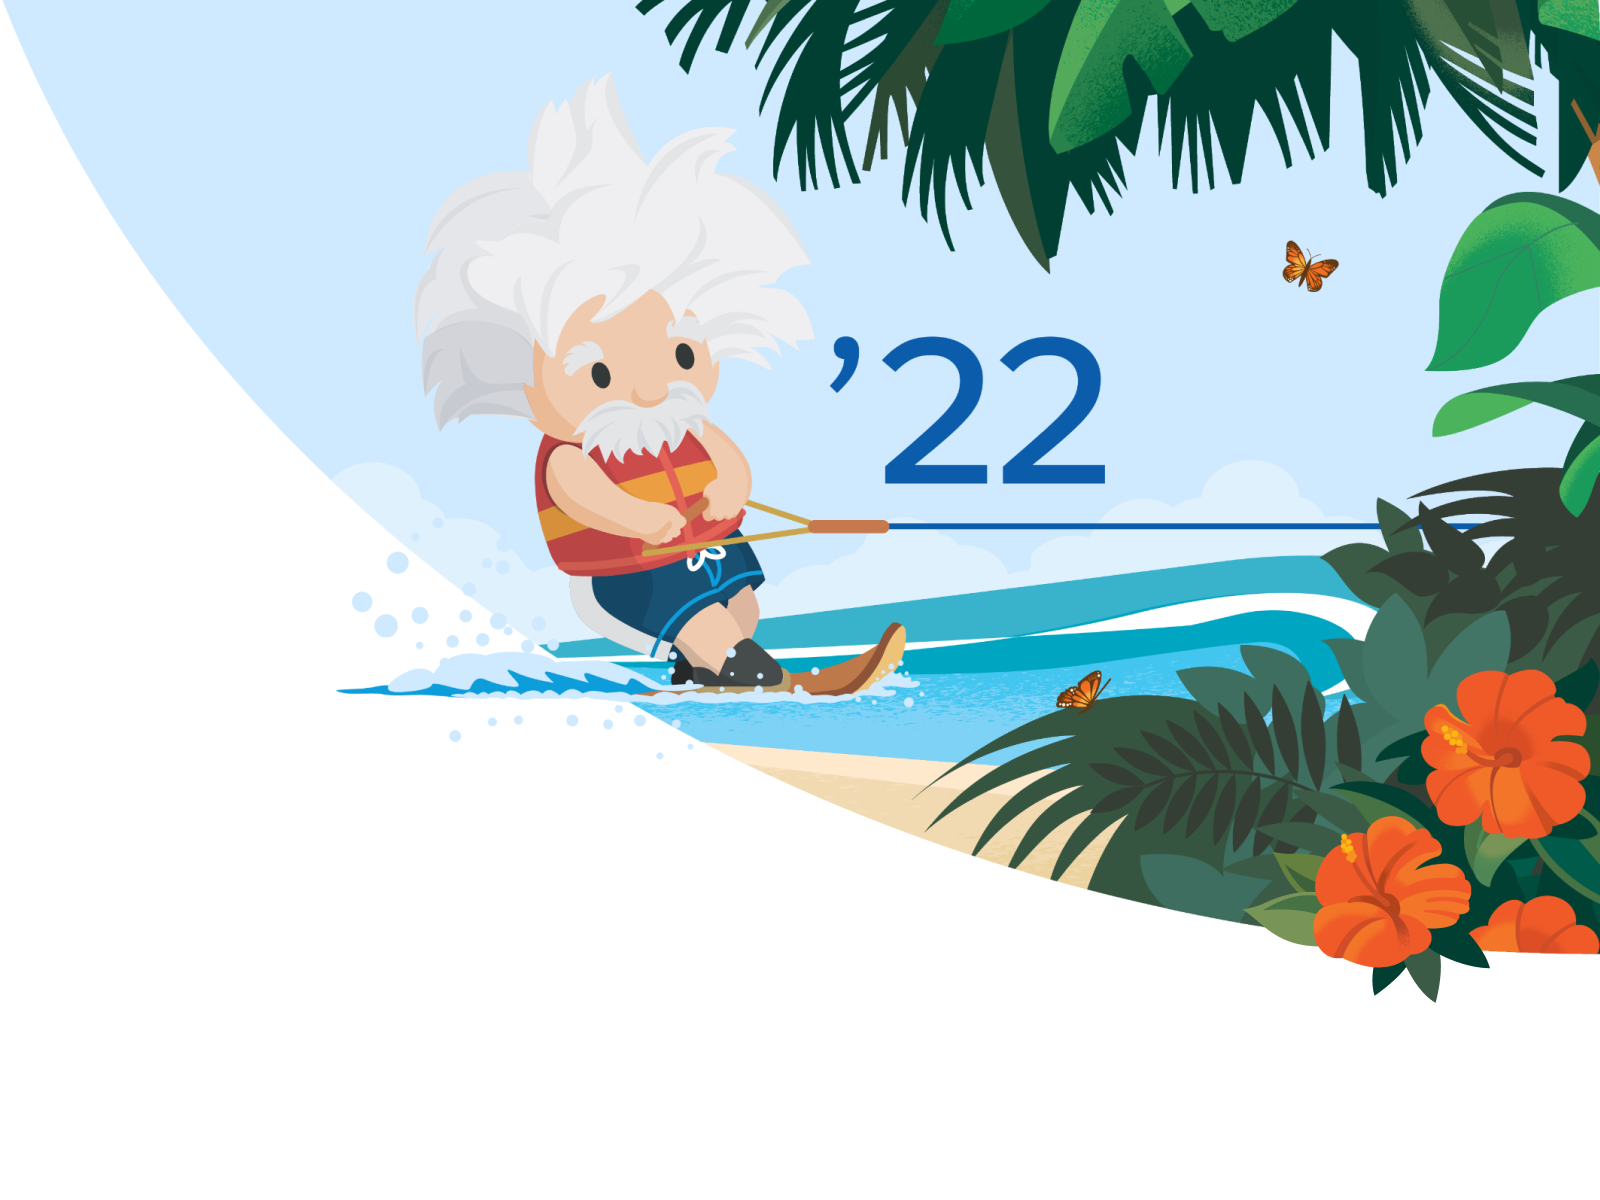 Salesforce summer release '22 cover with Einstein water skiing